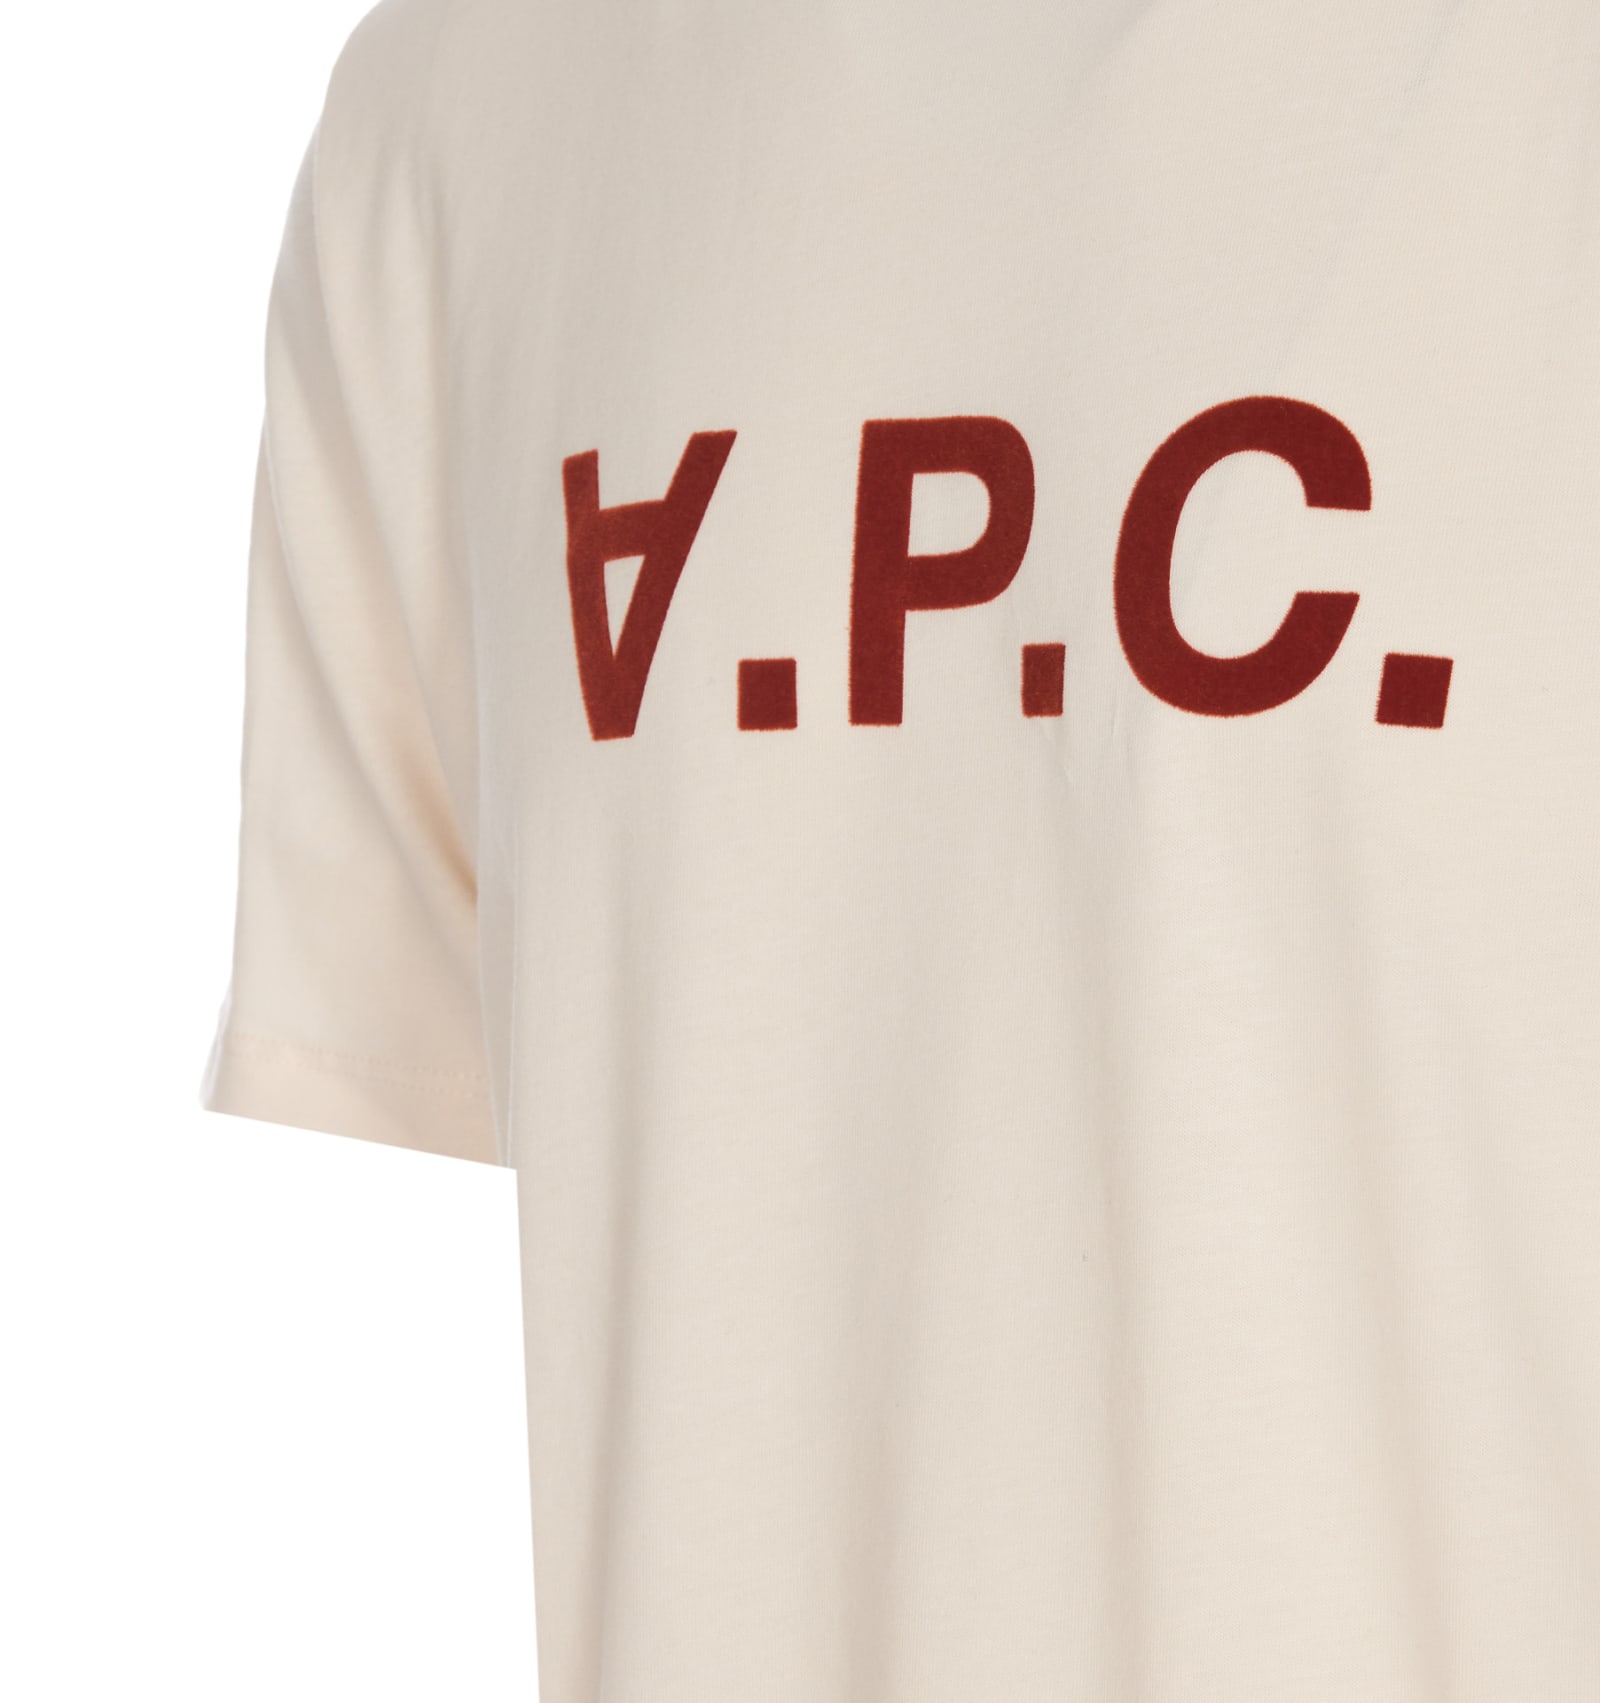 Shop Apc Vpc Color T-shirt T-shirt In White